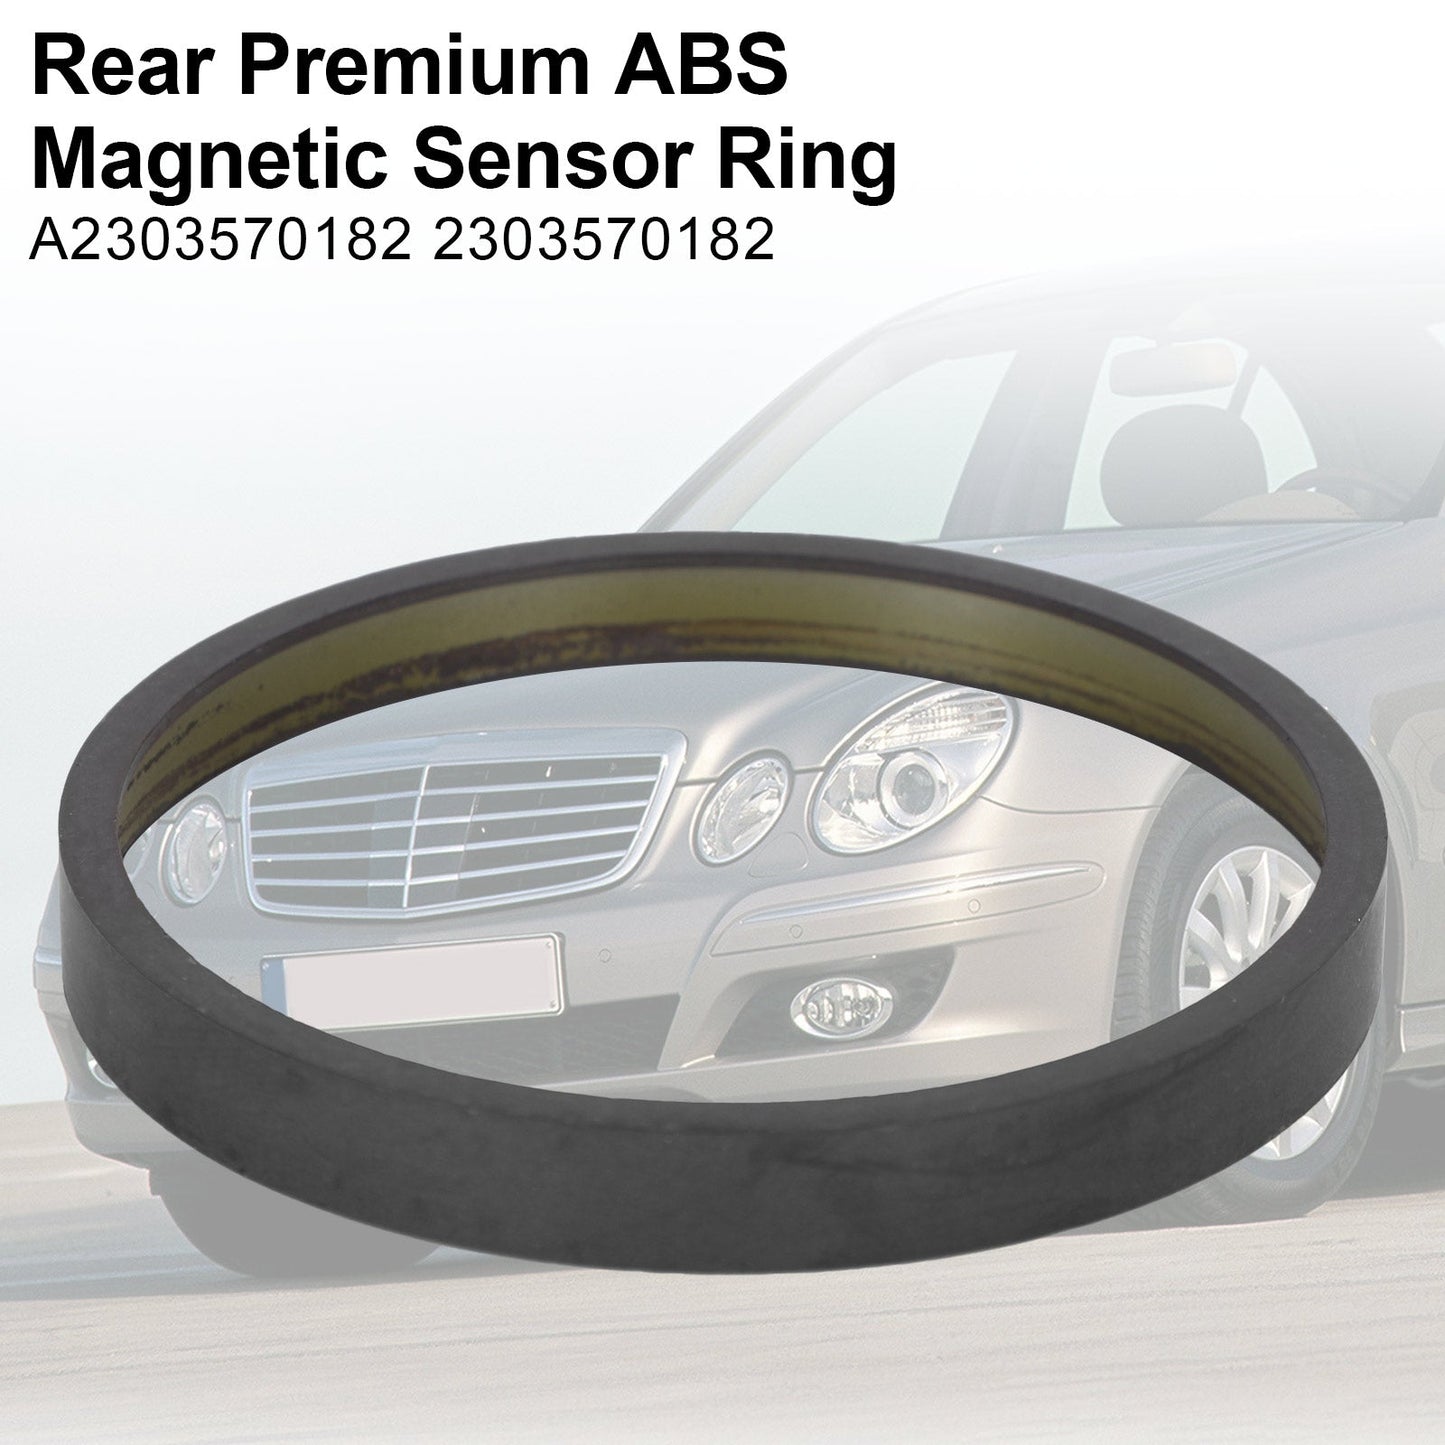 Rear Premium ABS Magnetic Sensor Ring For Mercedes Benz E-Class W211 A2303570182